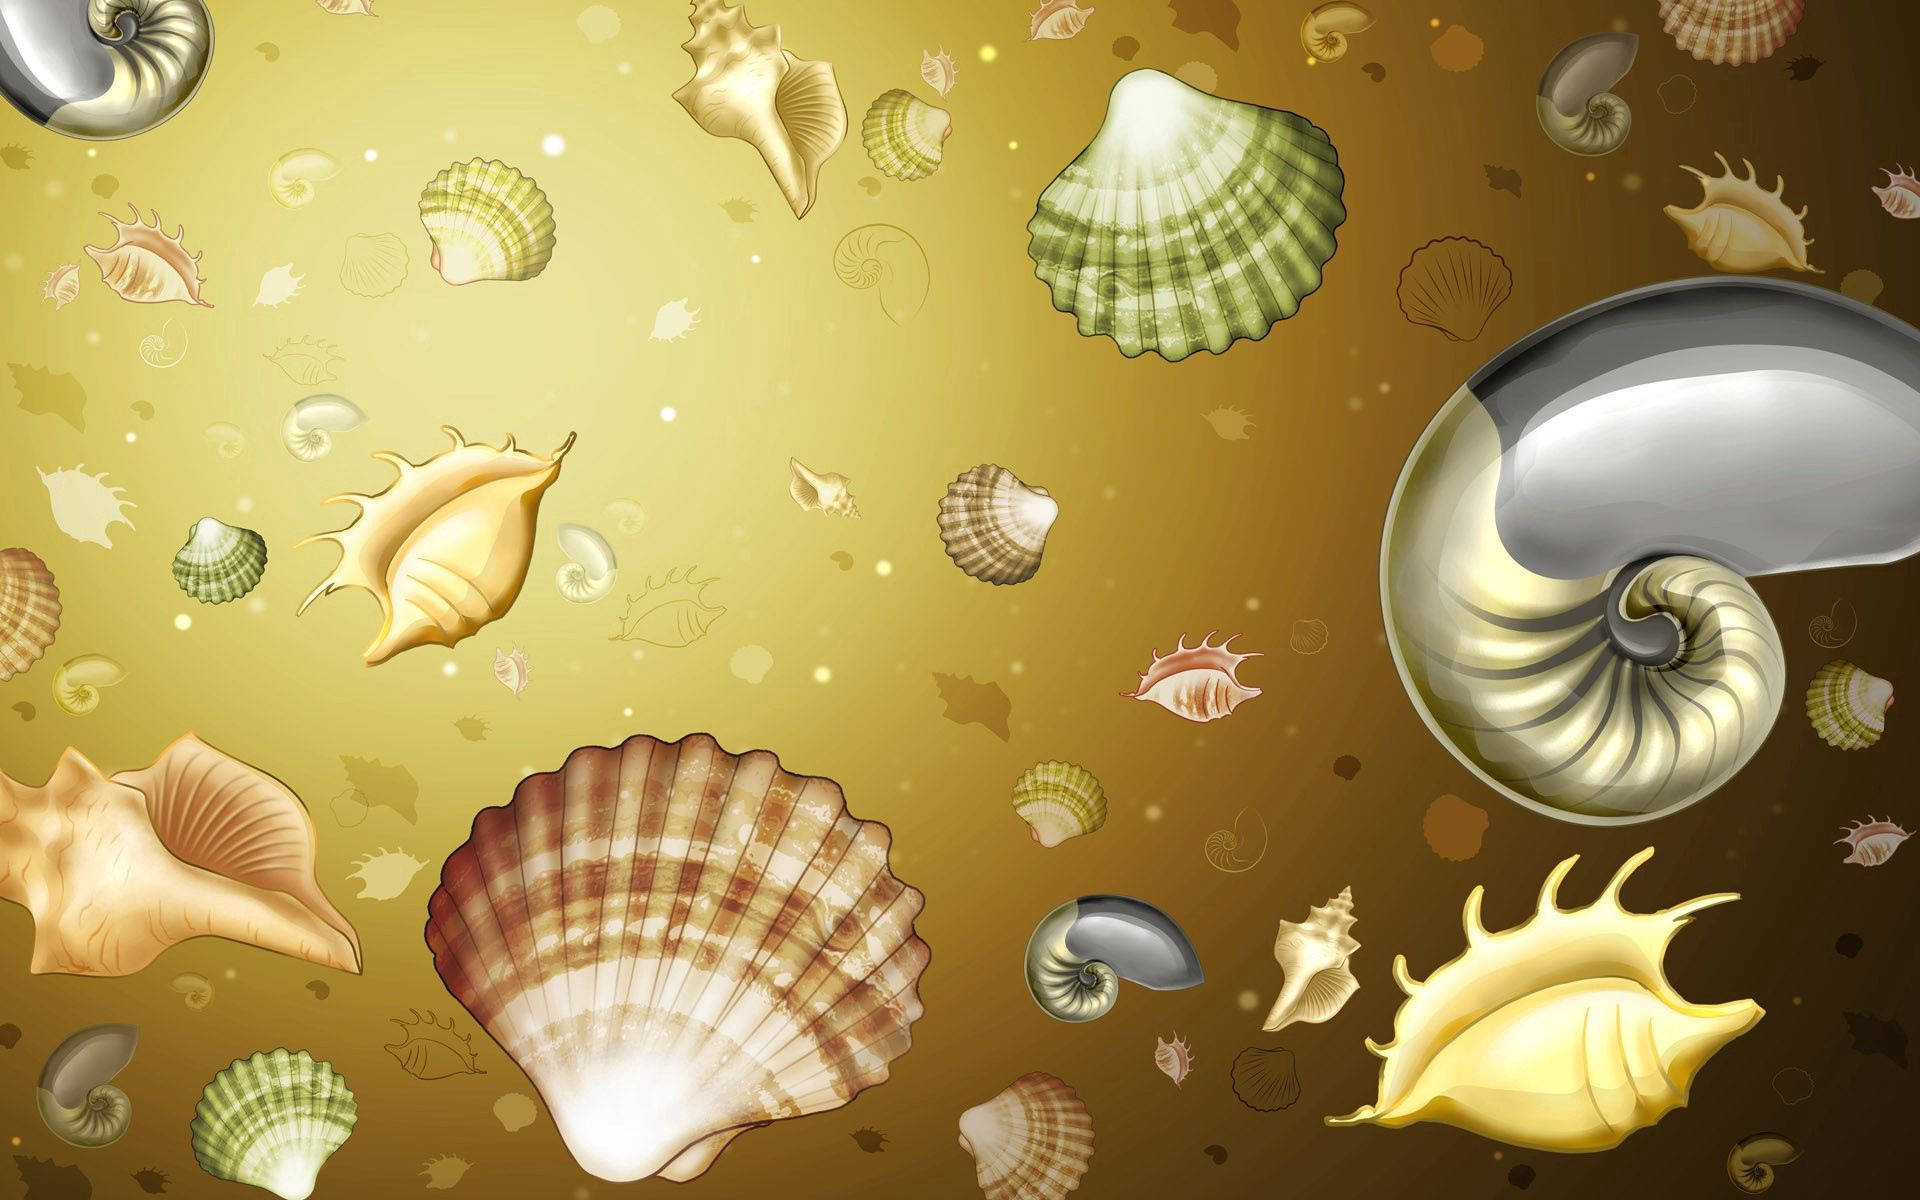 Animated shells image wallpaper.